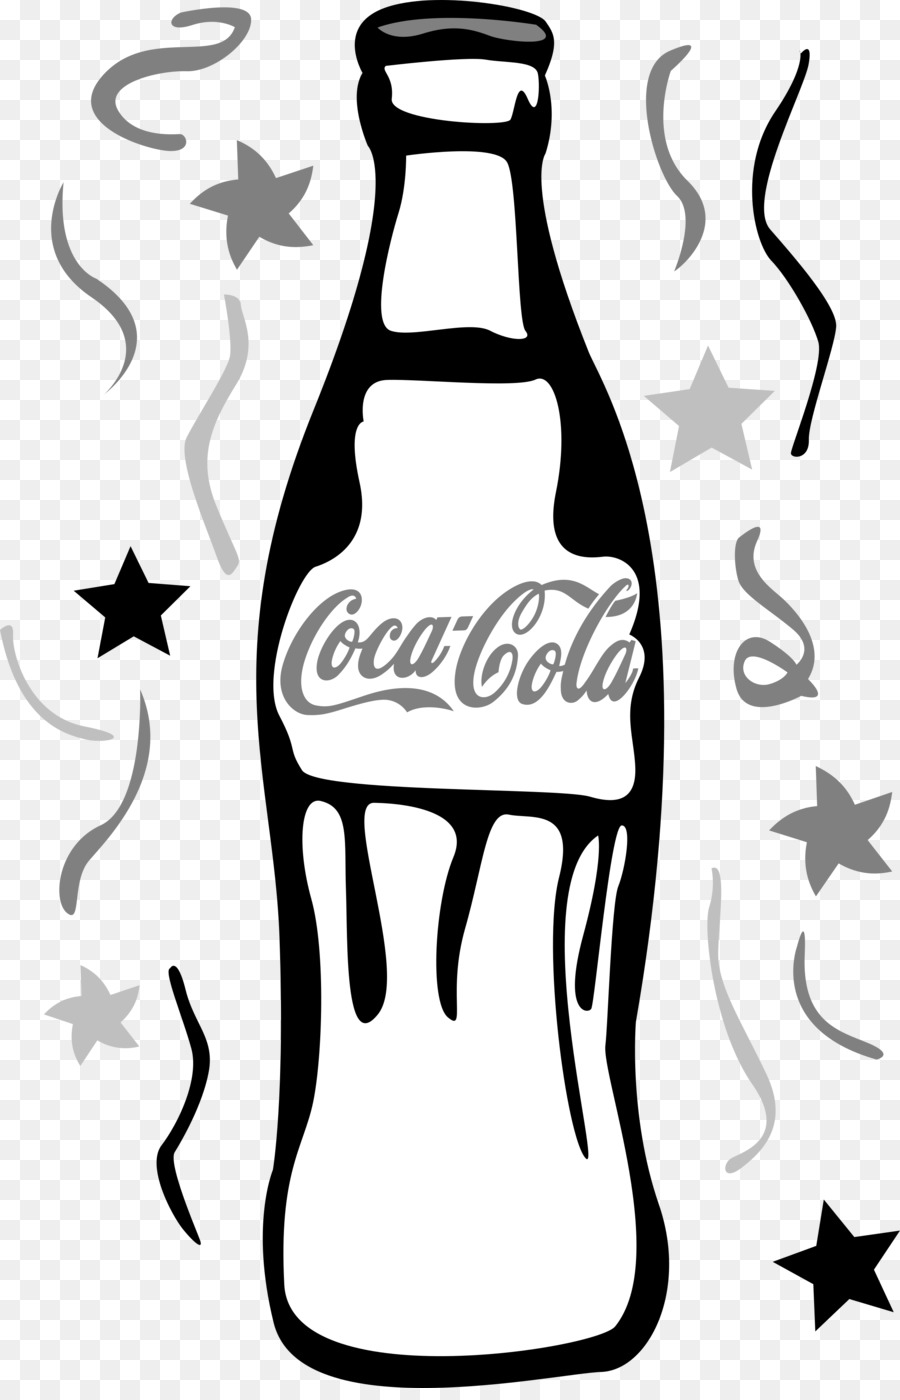 Coca-Cola Fizzy Drinks Bottle - coca cola png download - 2400*3701 - Free Transparent Cocacola png Download.